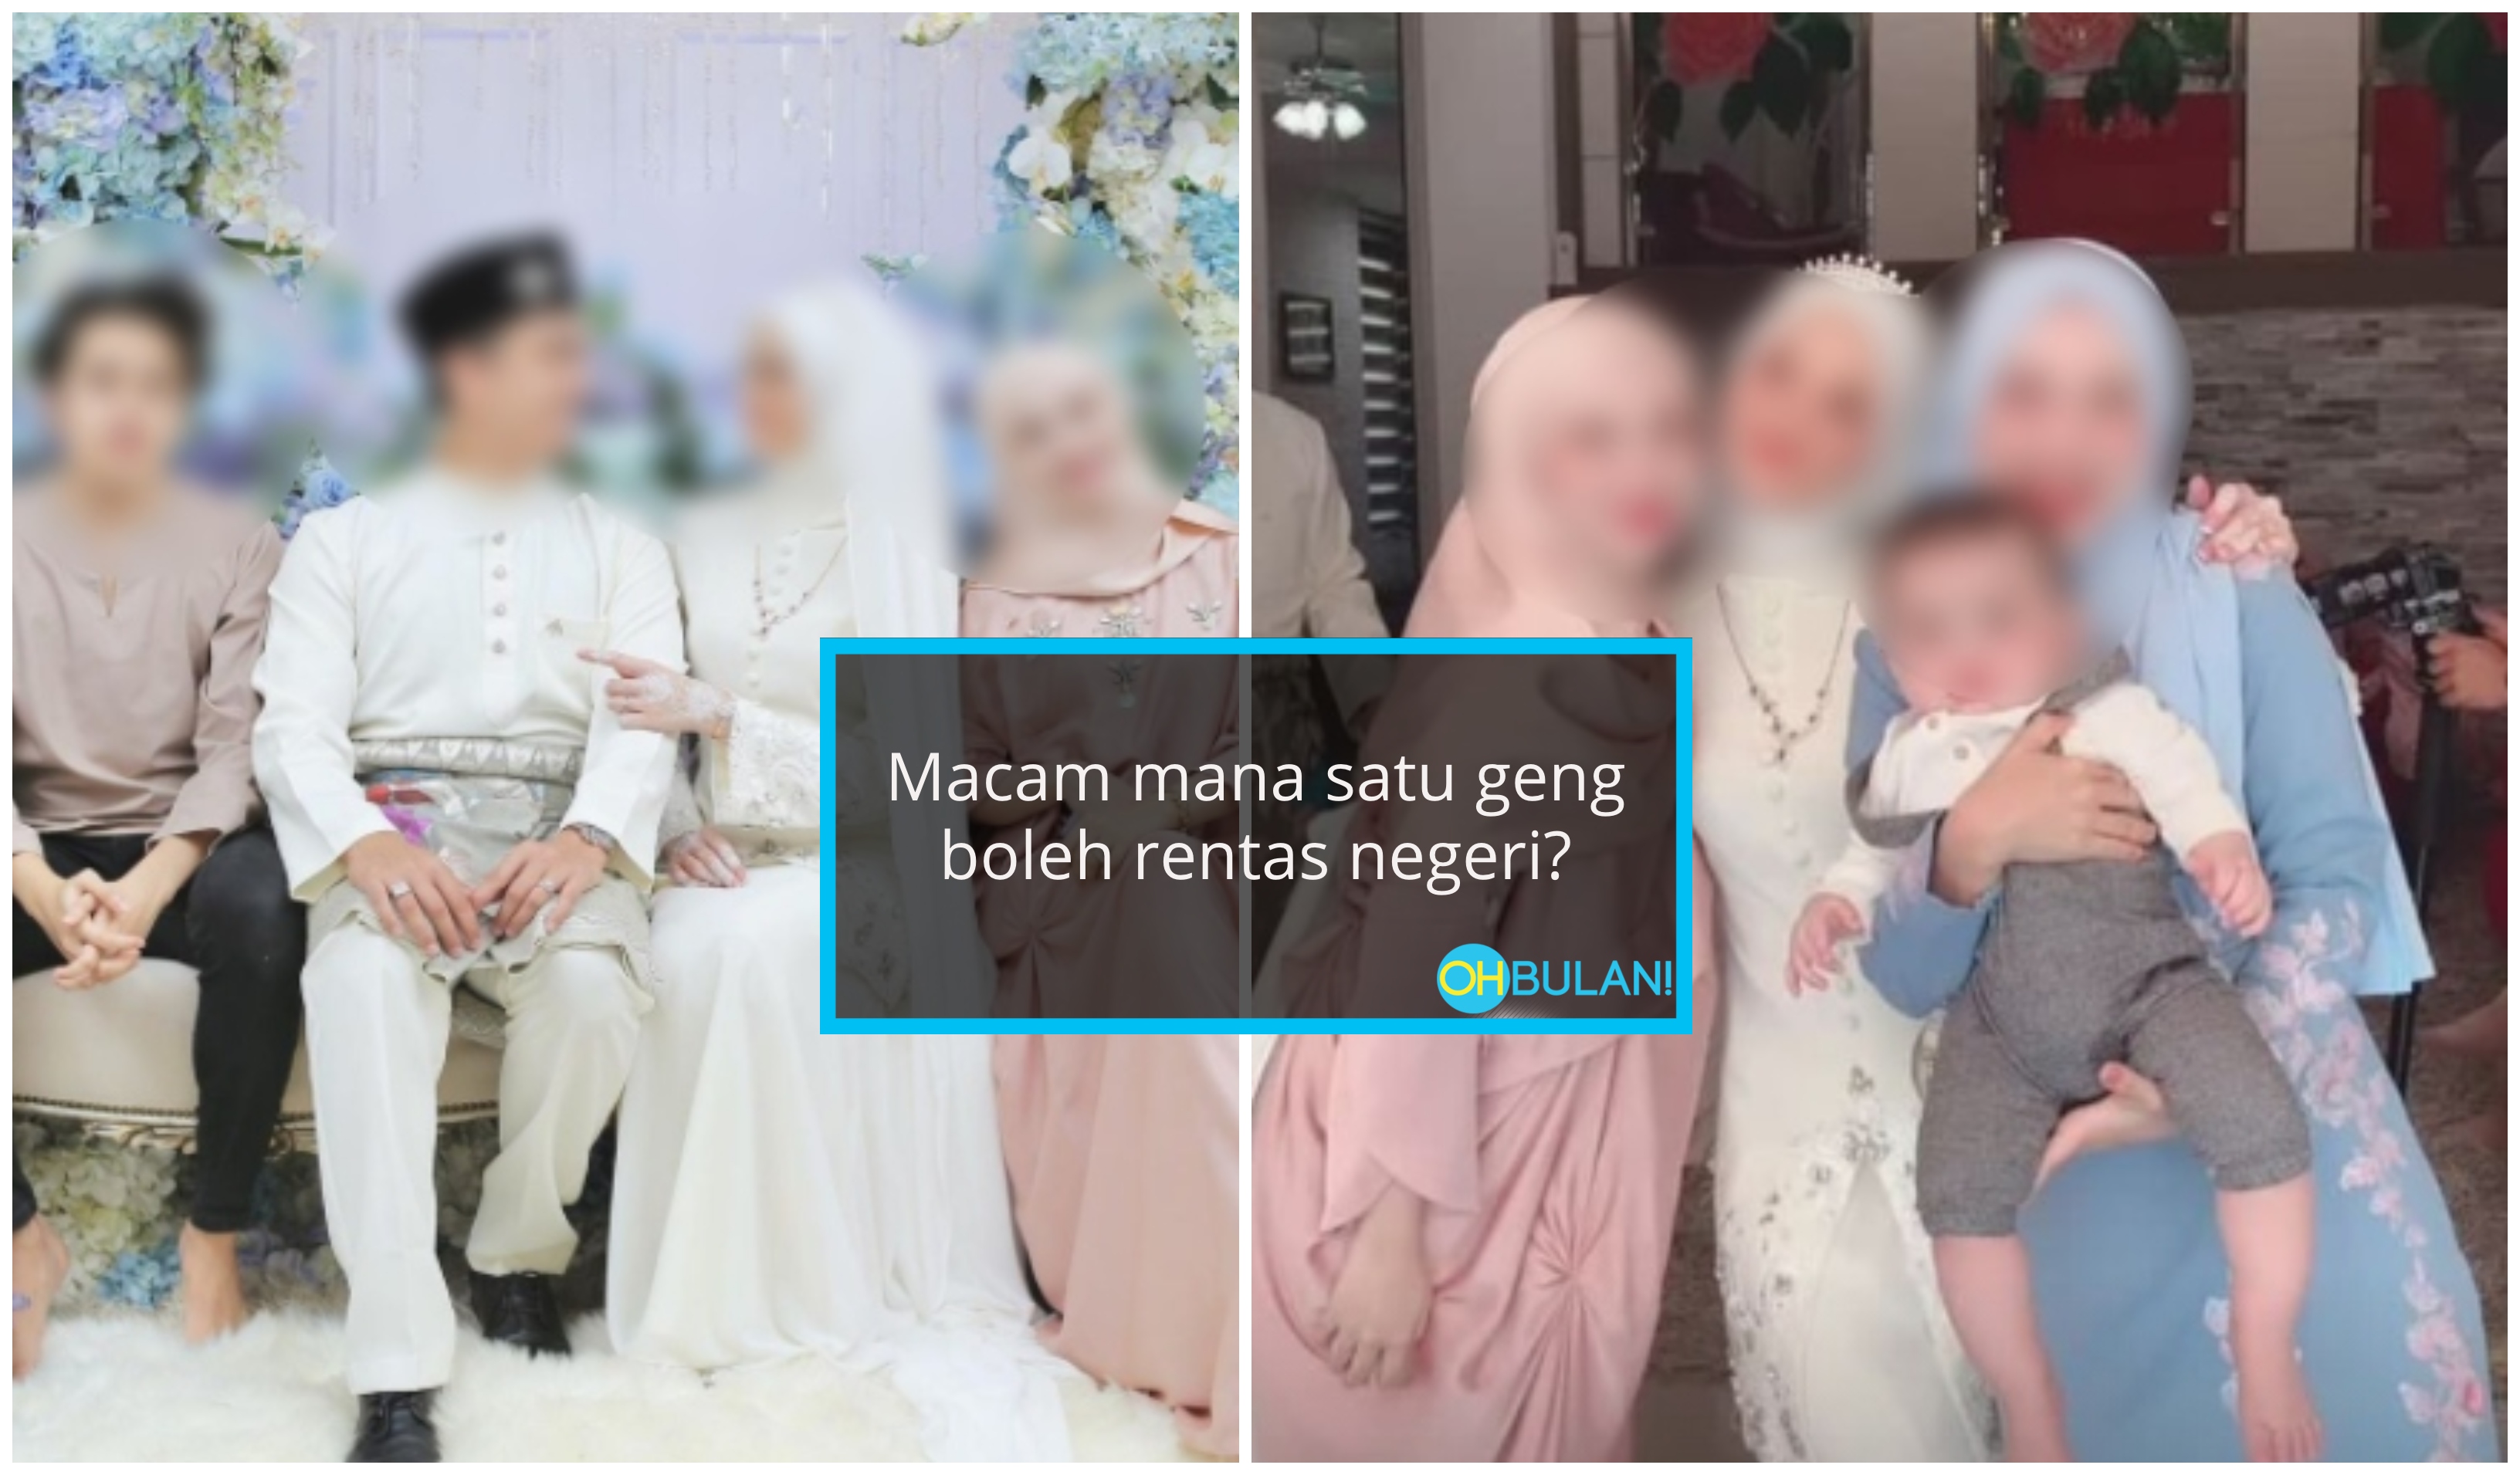 Influencer Didakwa Rentas Negeri Pergi ‘Wedding’ Kawan, Netizen Minta Tindakan Tegas Diambil